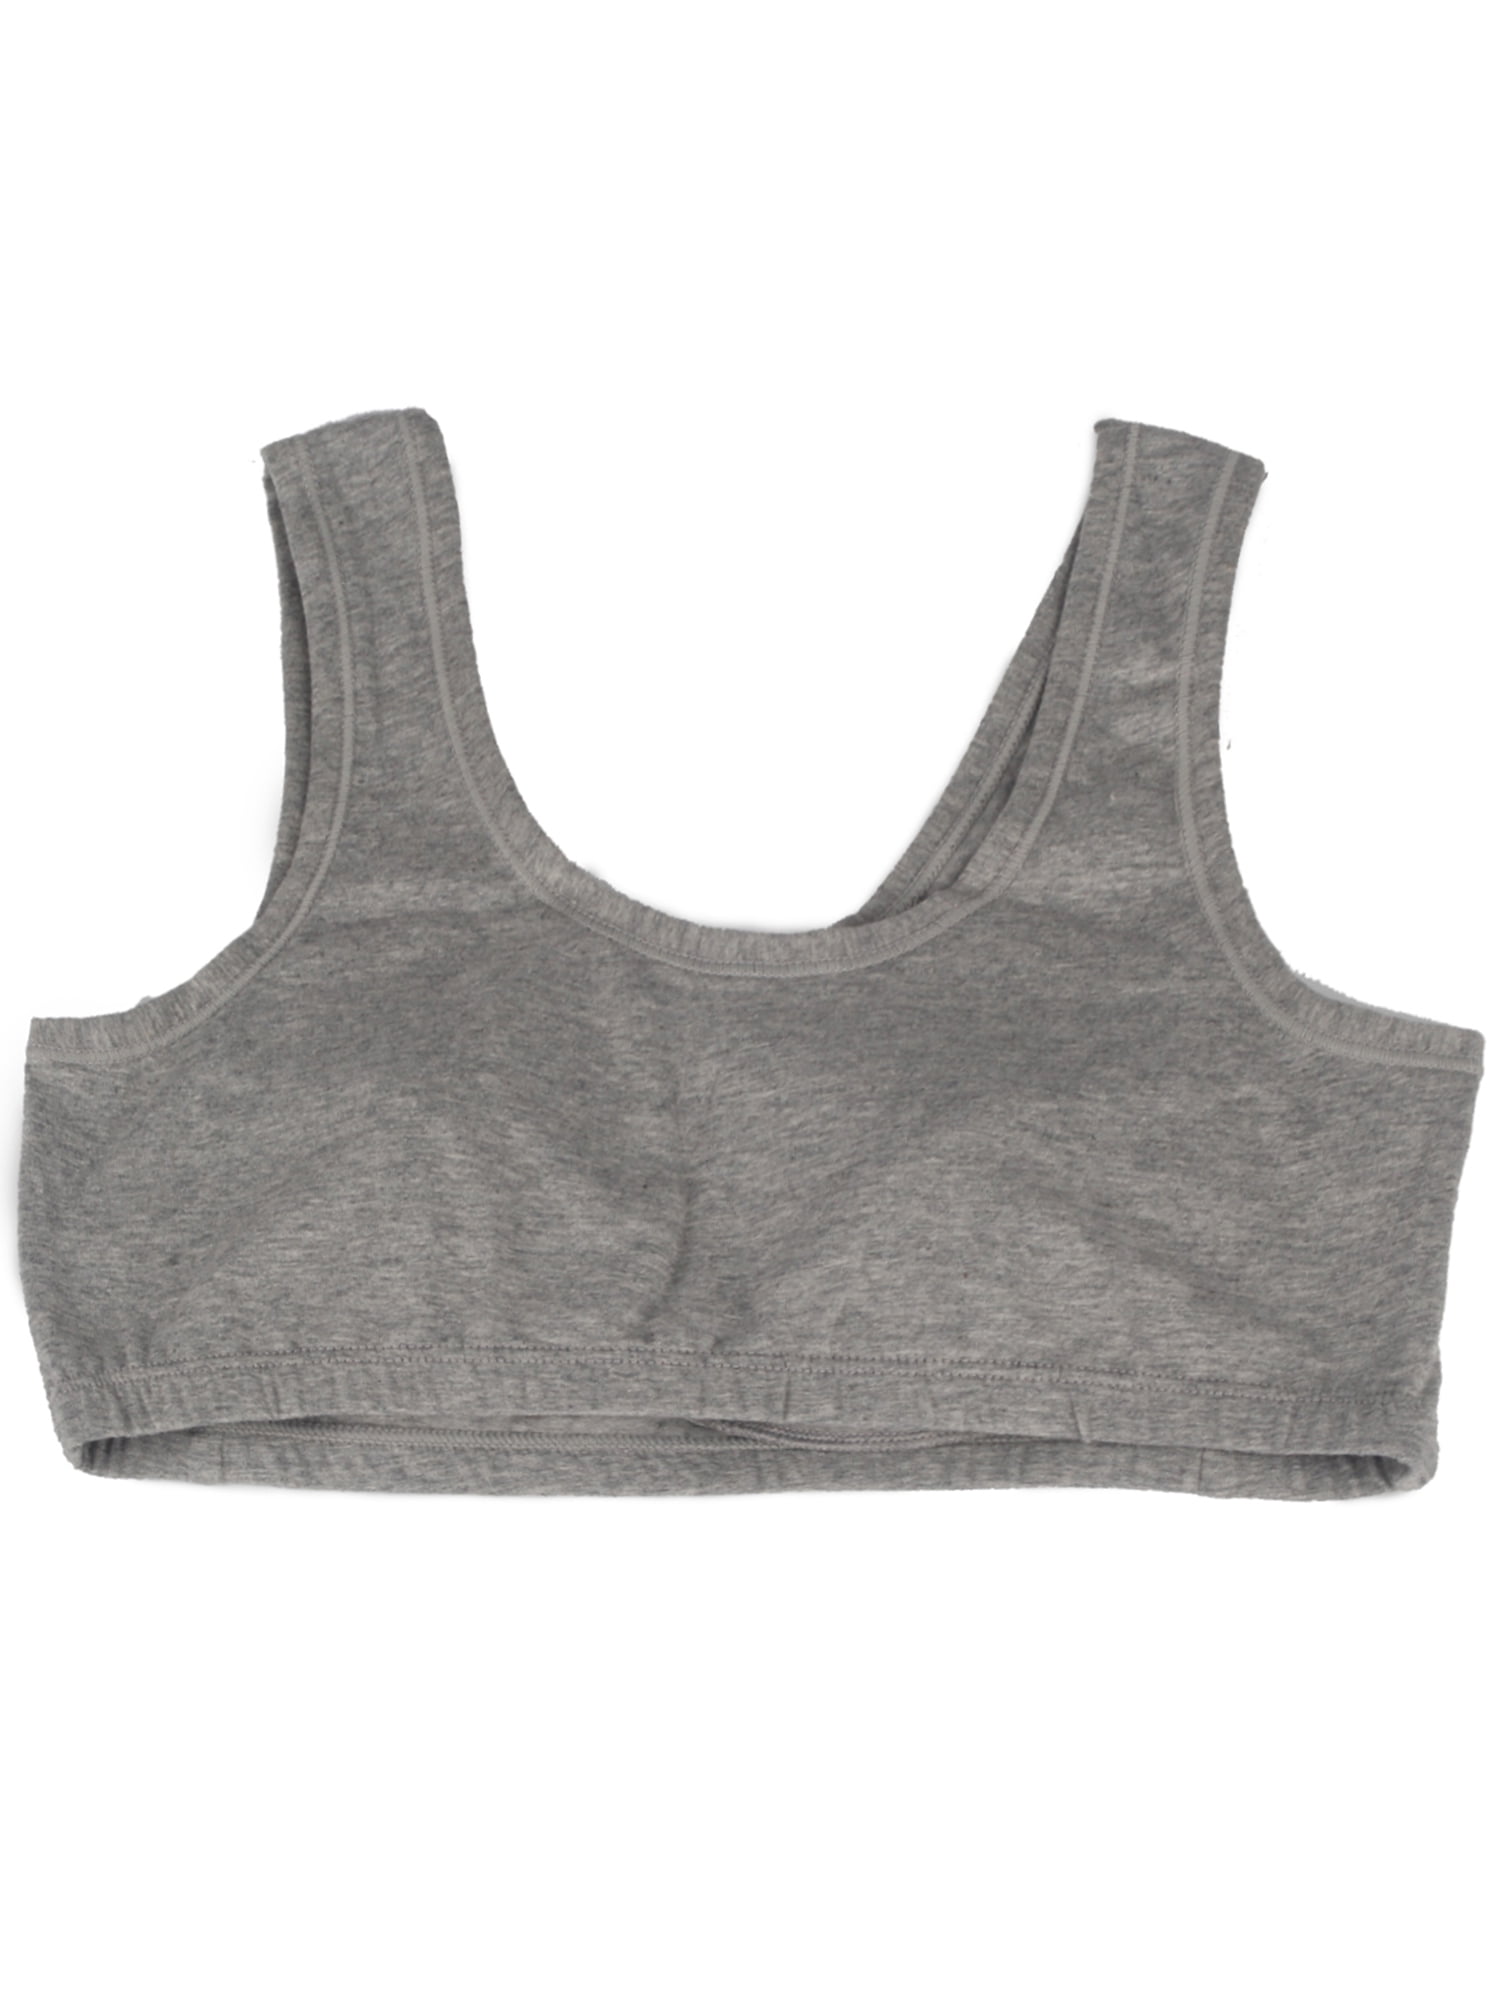 LELINTA Women's Breathable Cotton Racerback Sports Bra High Impact Support  Workout Yoga Bra Size M-L 